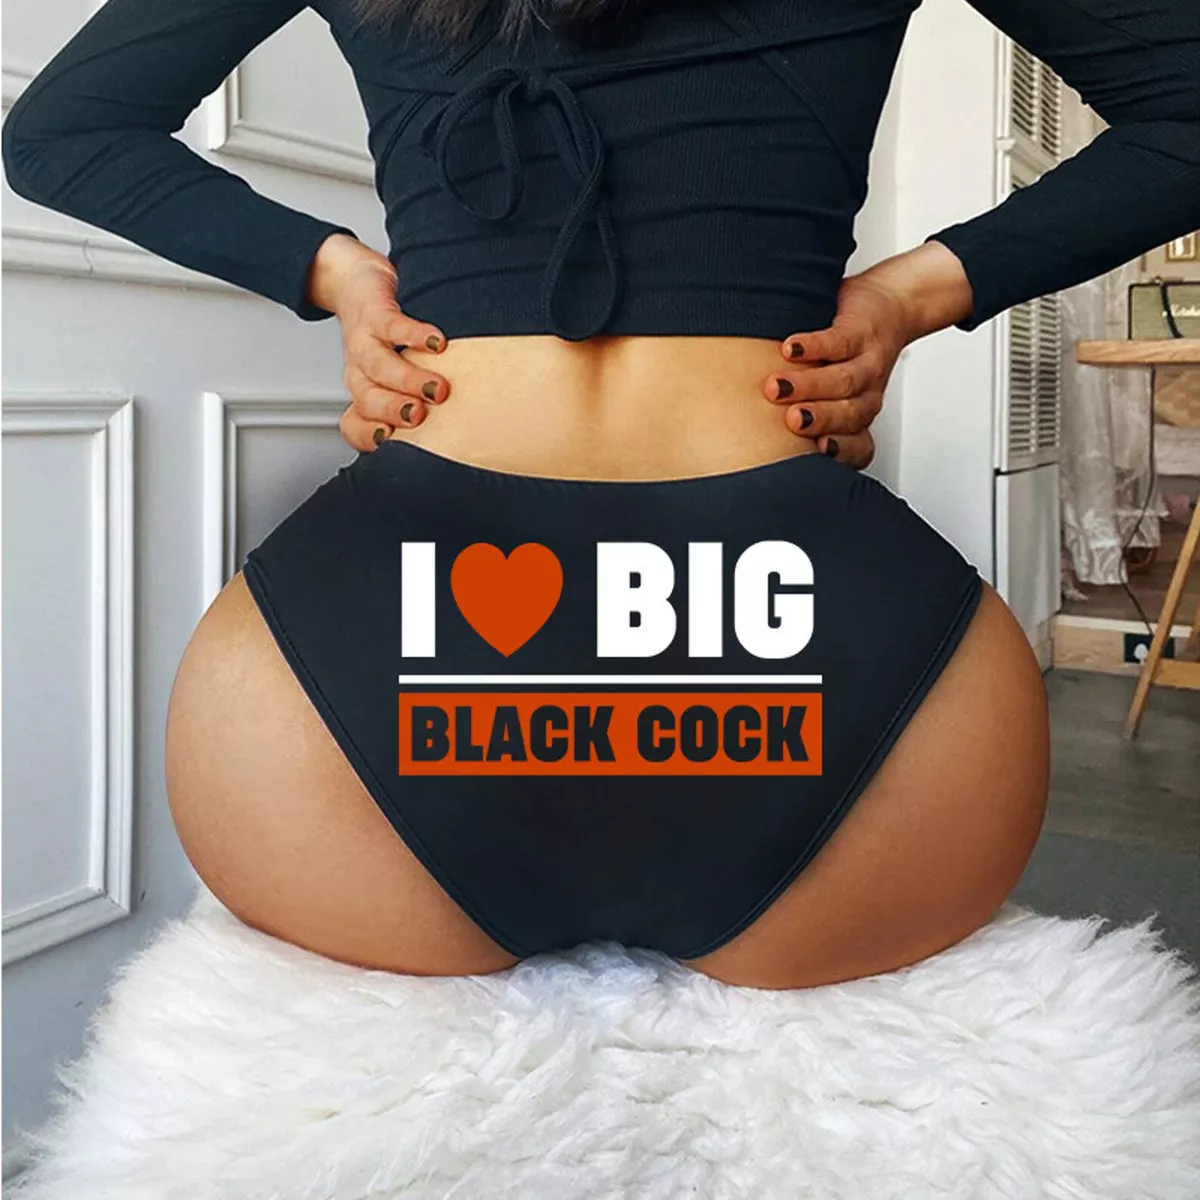 alicia hawk share women who love big dick photos